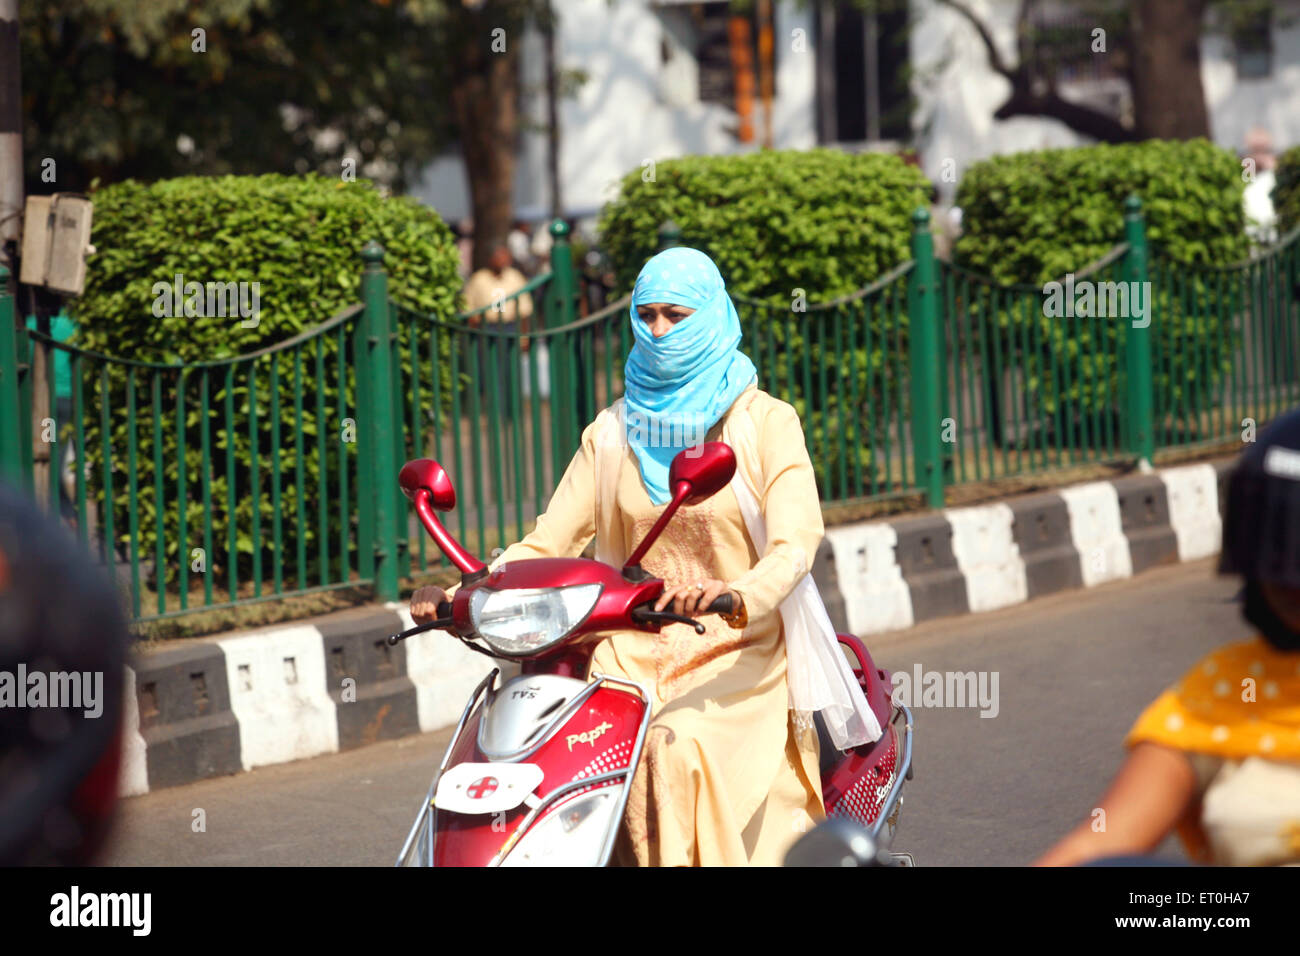 Femme indienne conduisant le scooter visage couvert, Ranchi, Jharkhand, Inde, vie indienne Banque D'Images